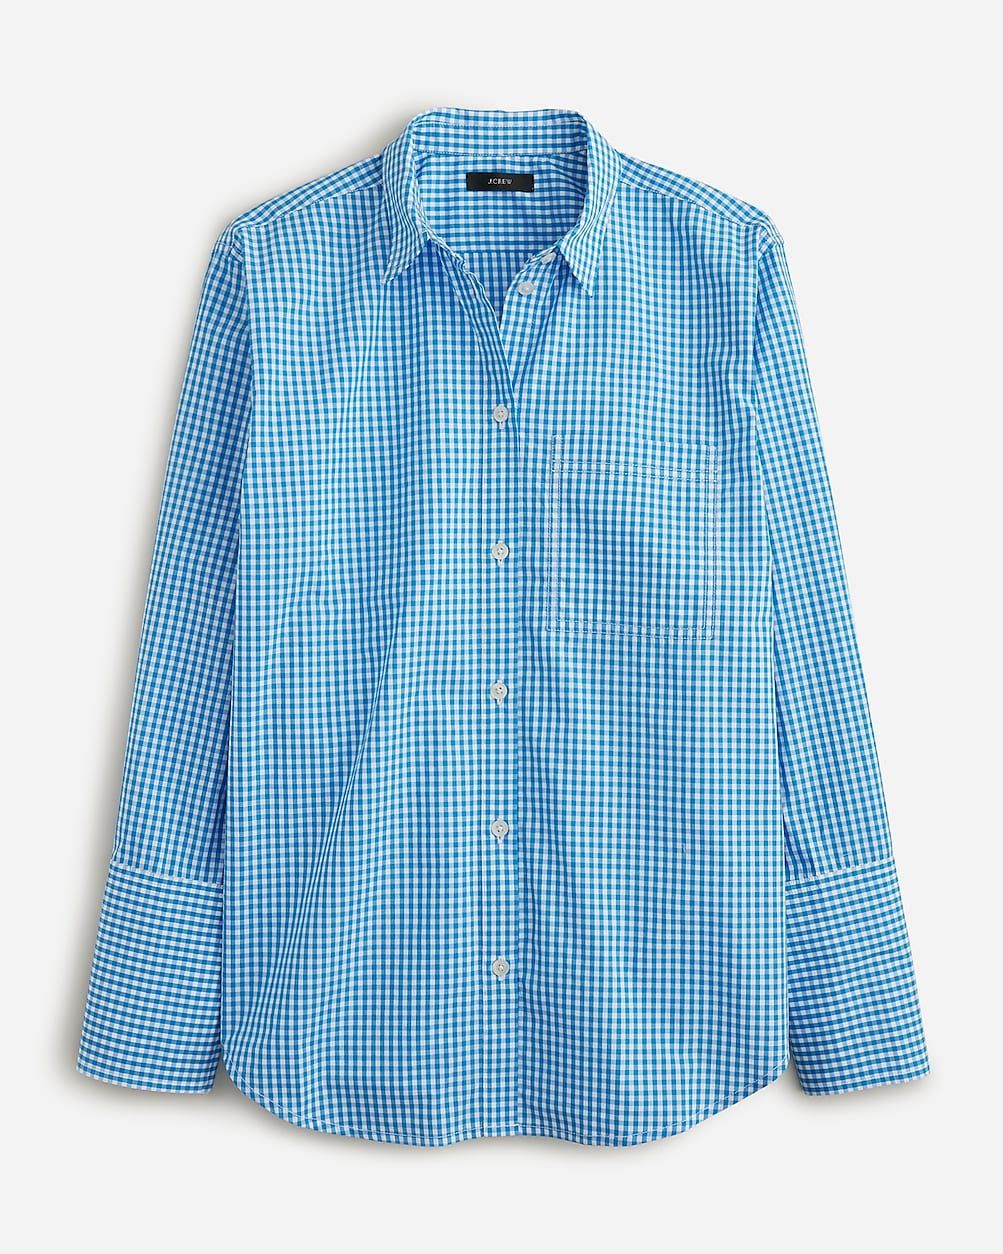 Garçon cotton poplin shirt in gingham | J.Crew US